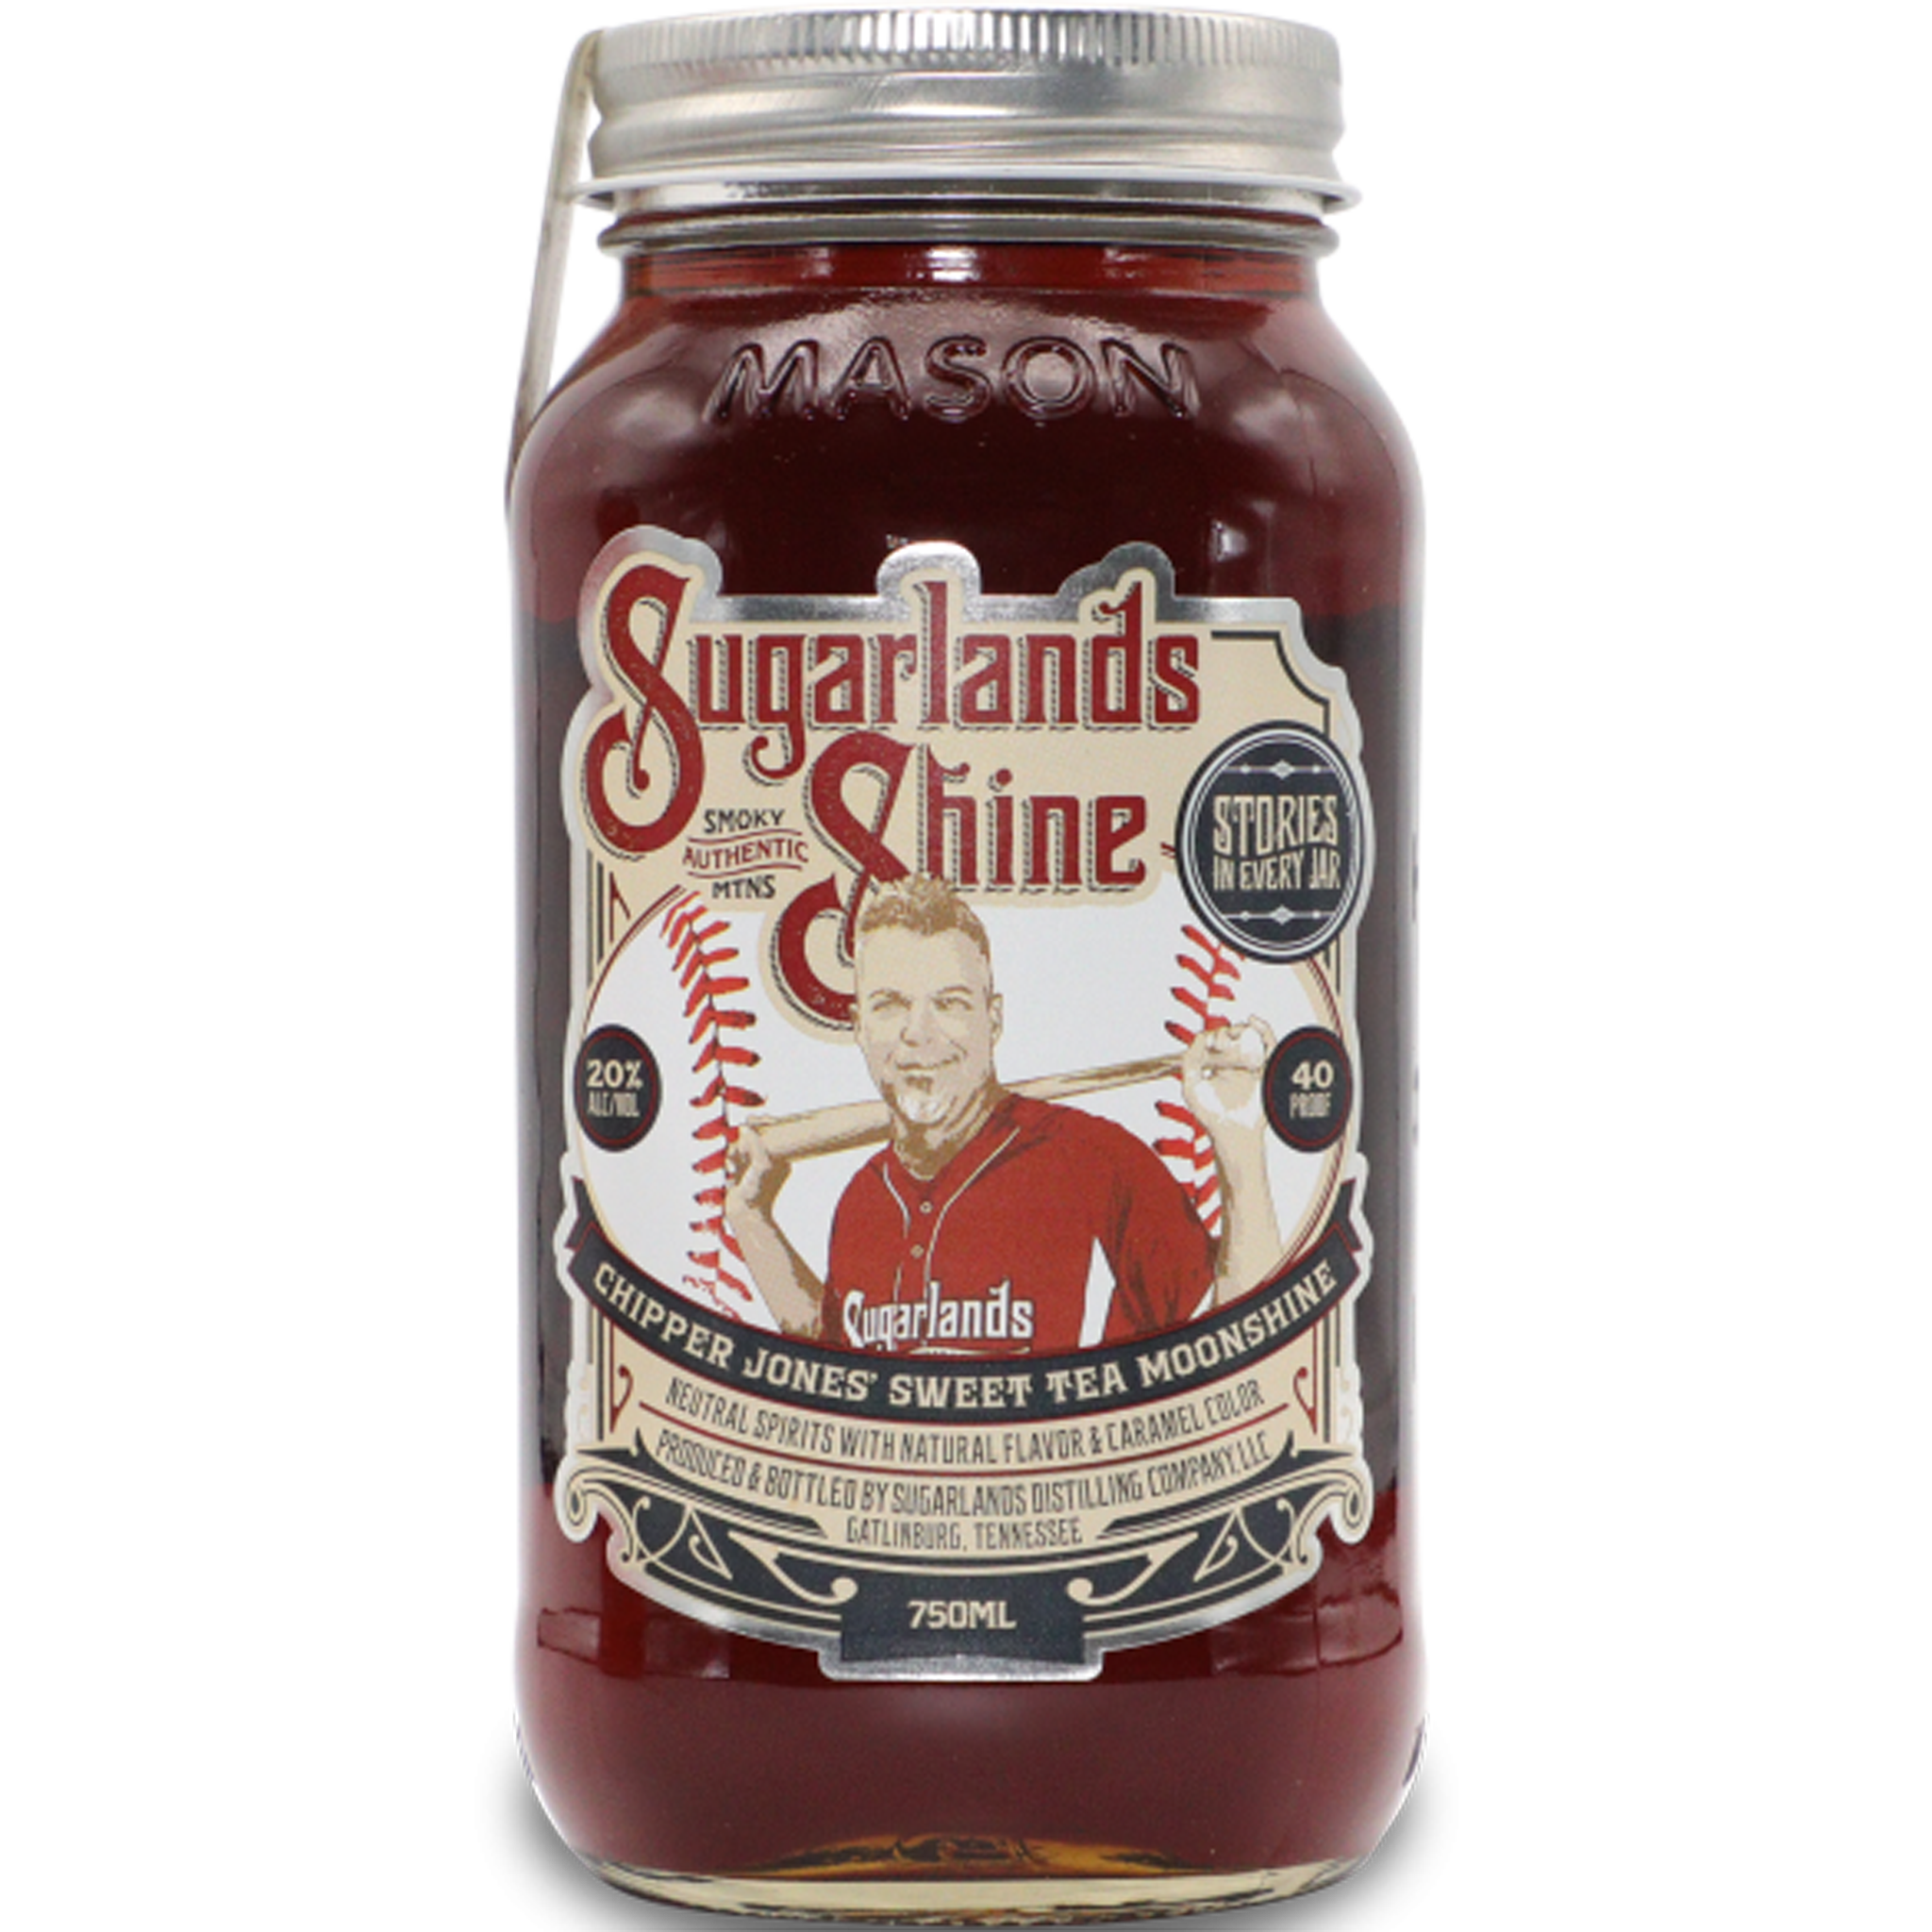 Sugarlands Shine Chipper Jones Sweet Tea Moonshine